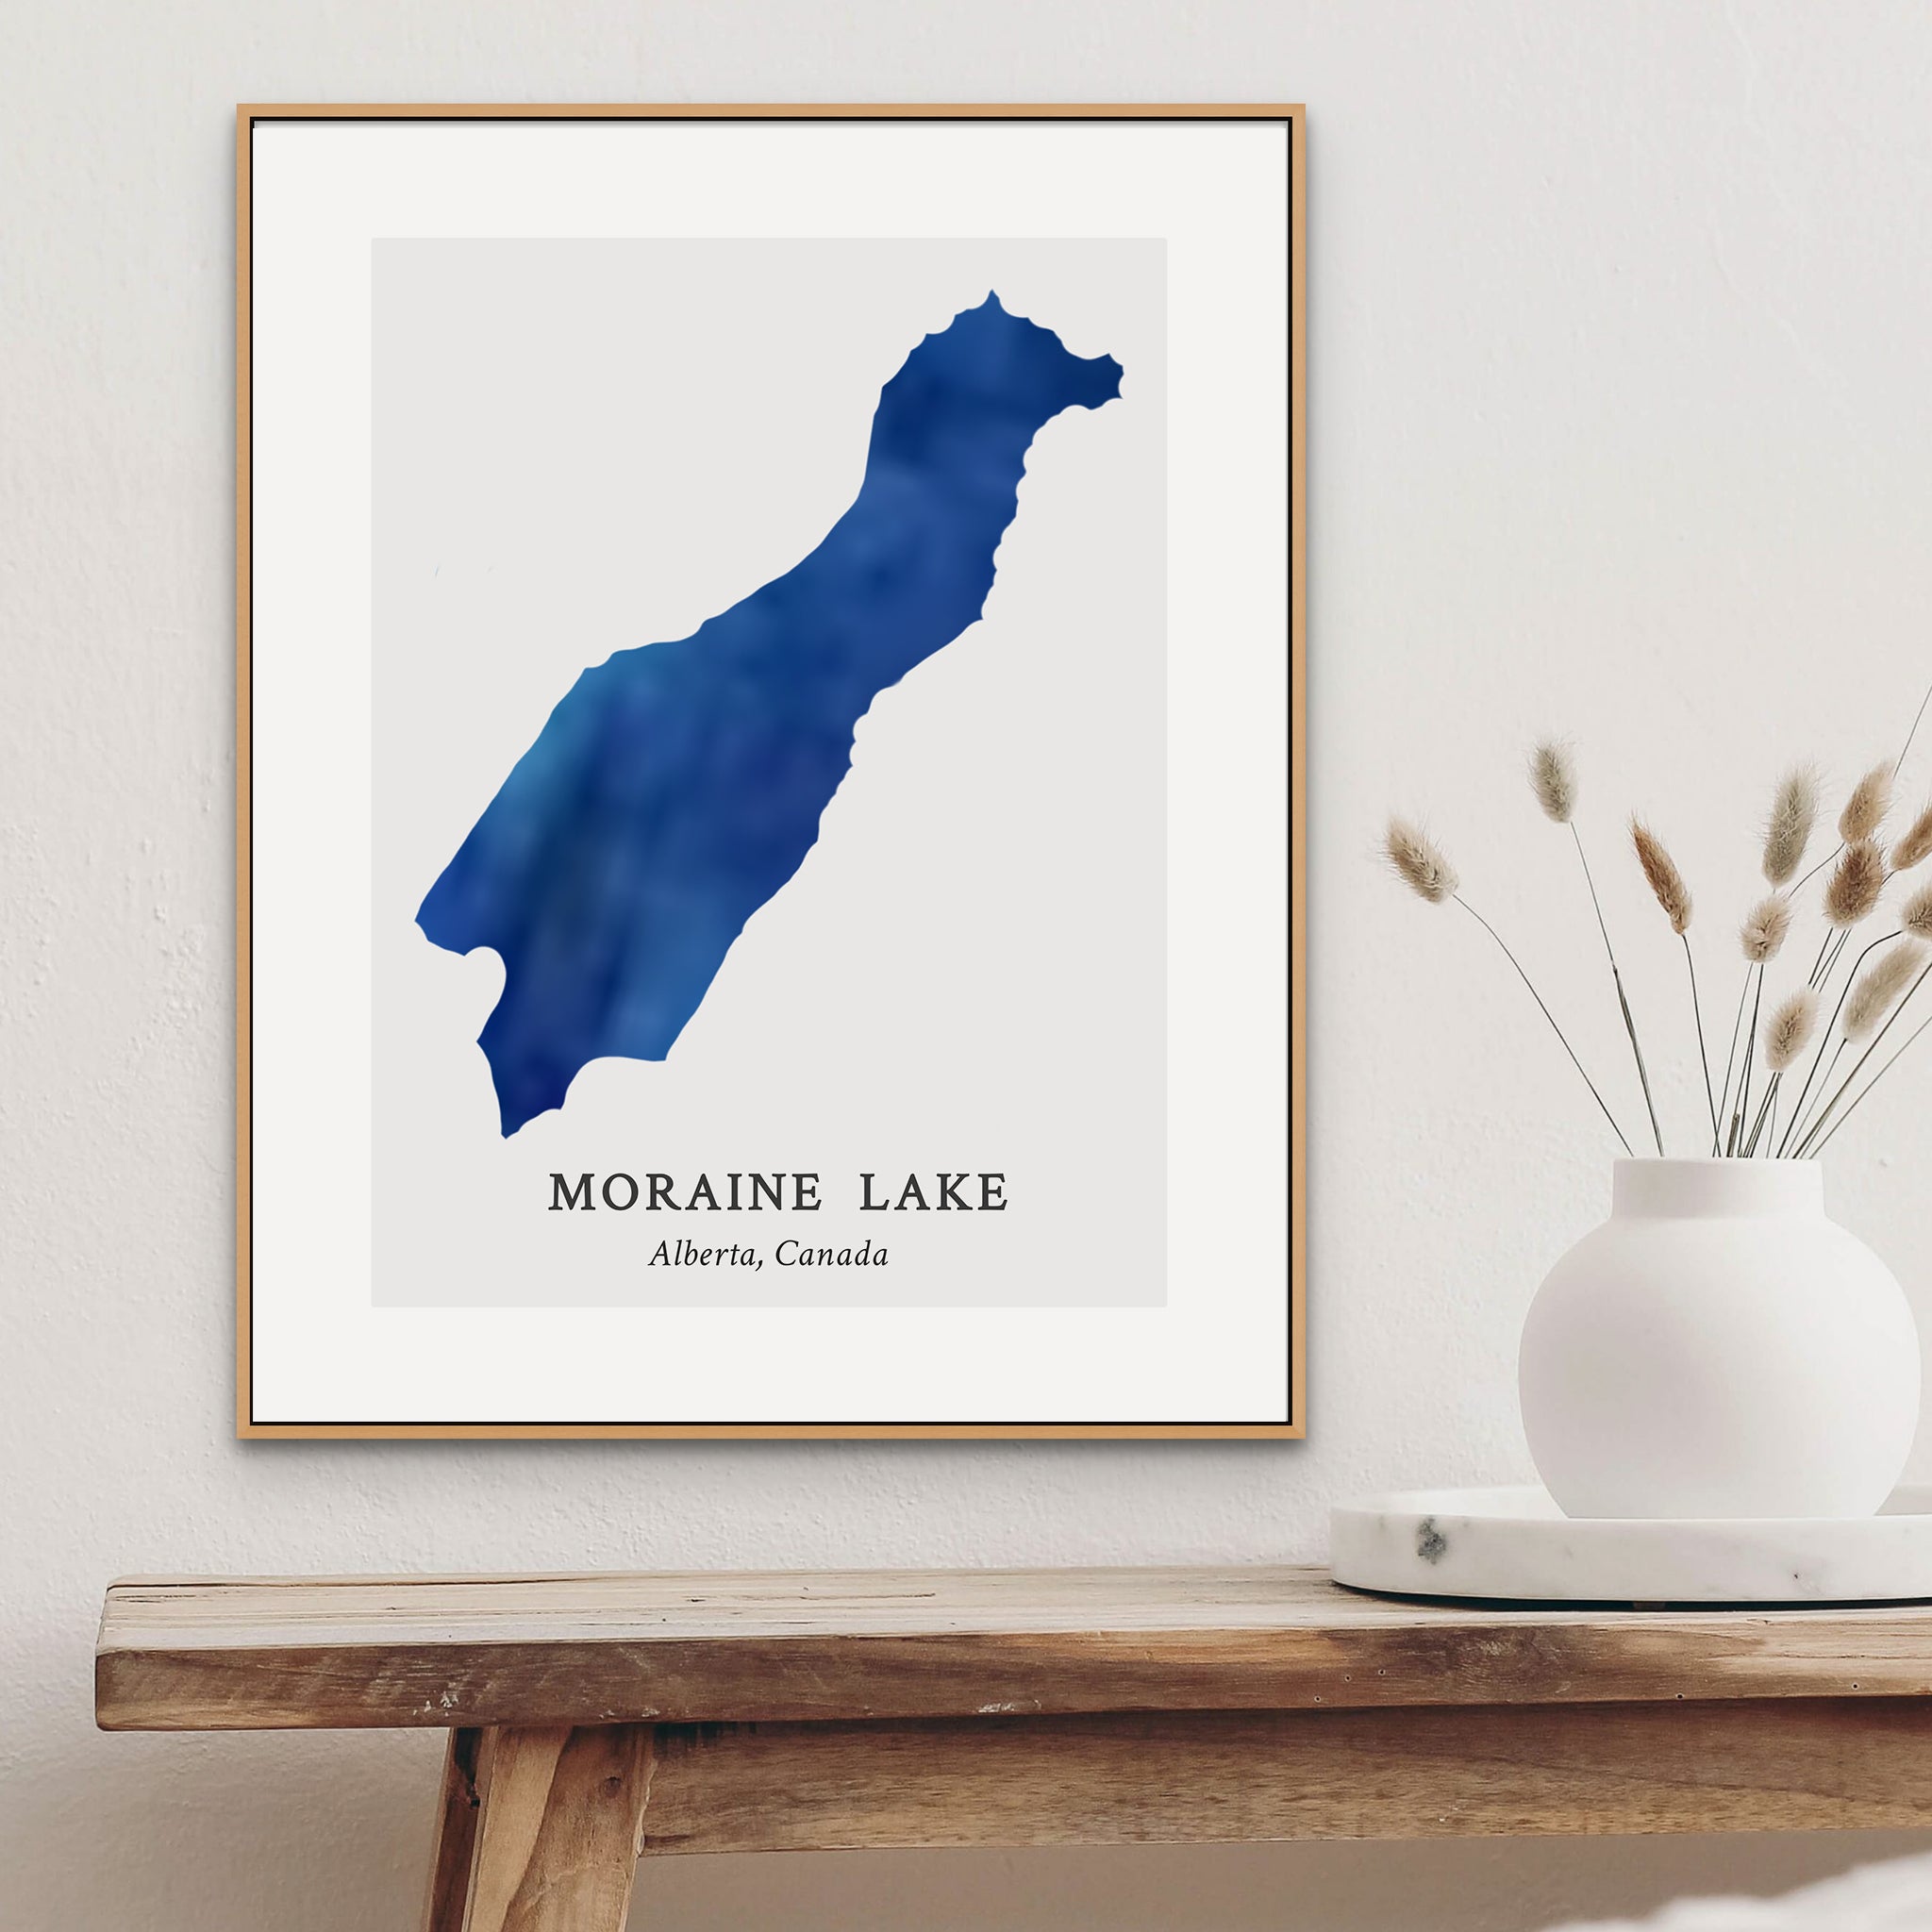 Canada - Morraine Lake Map